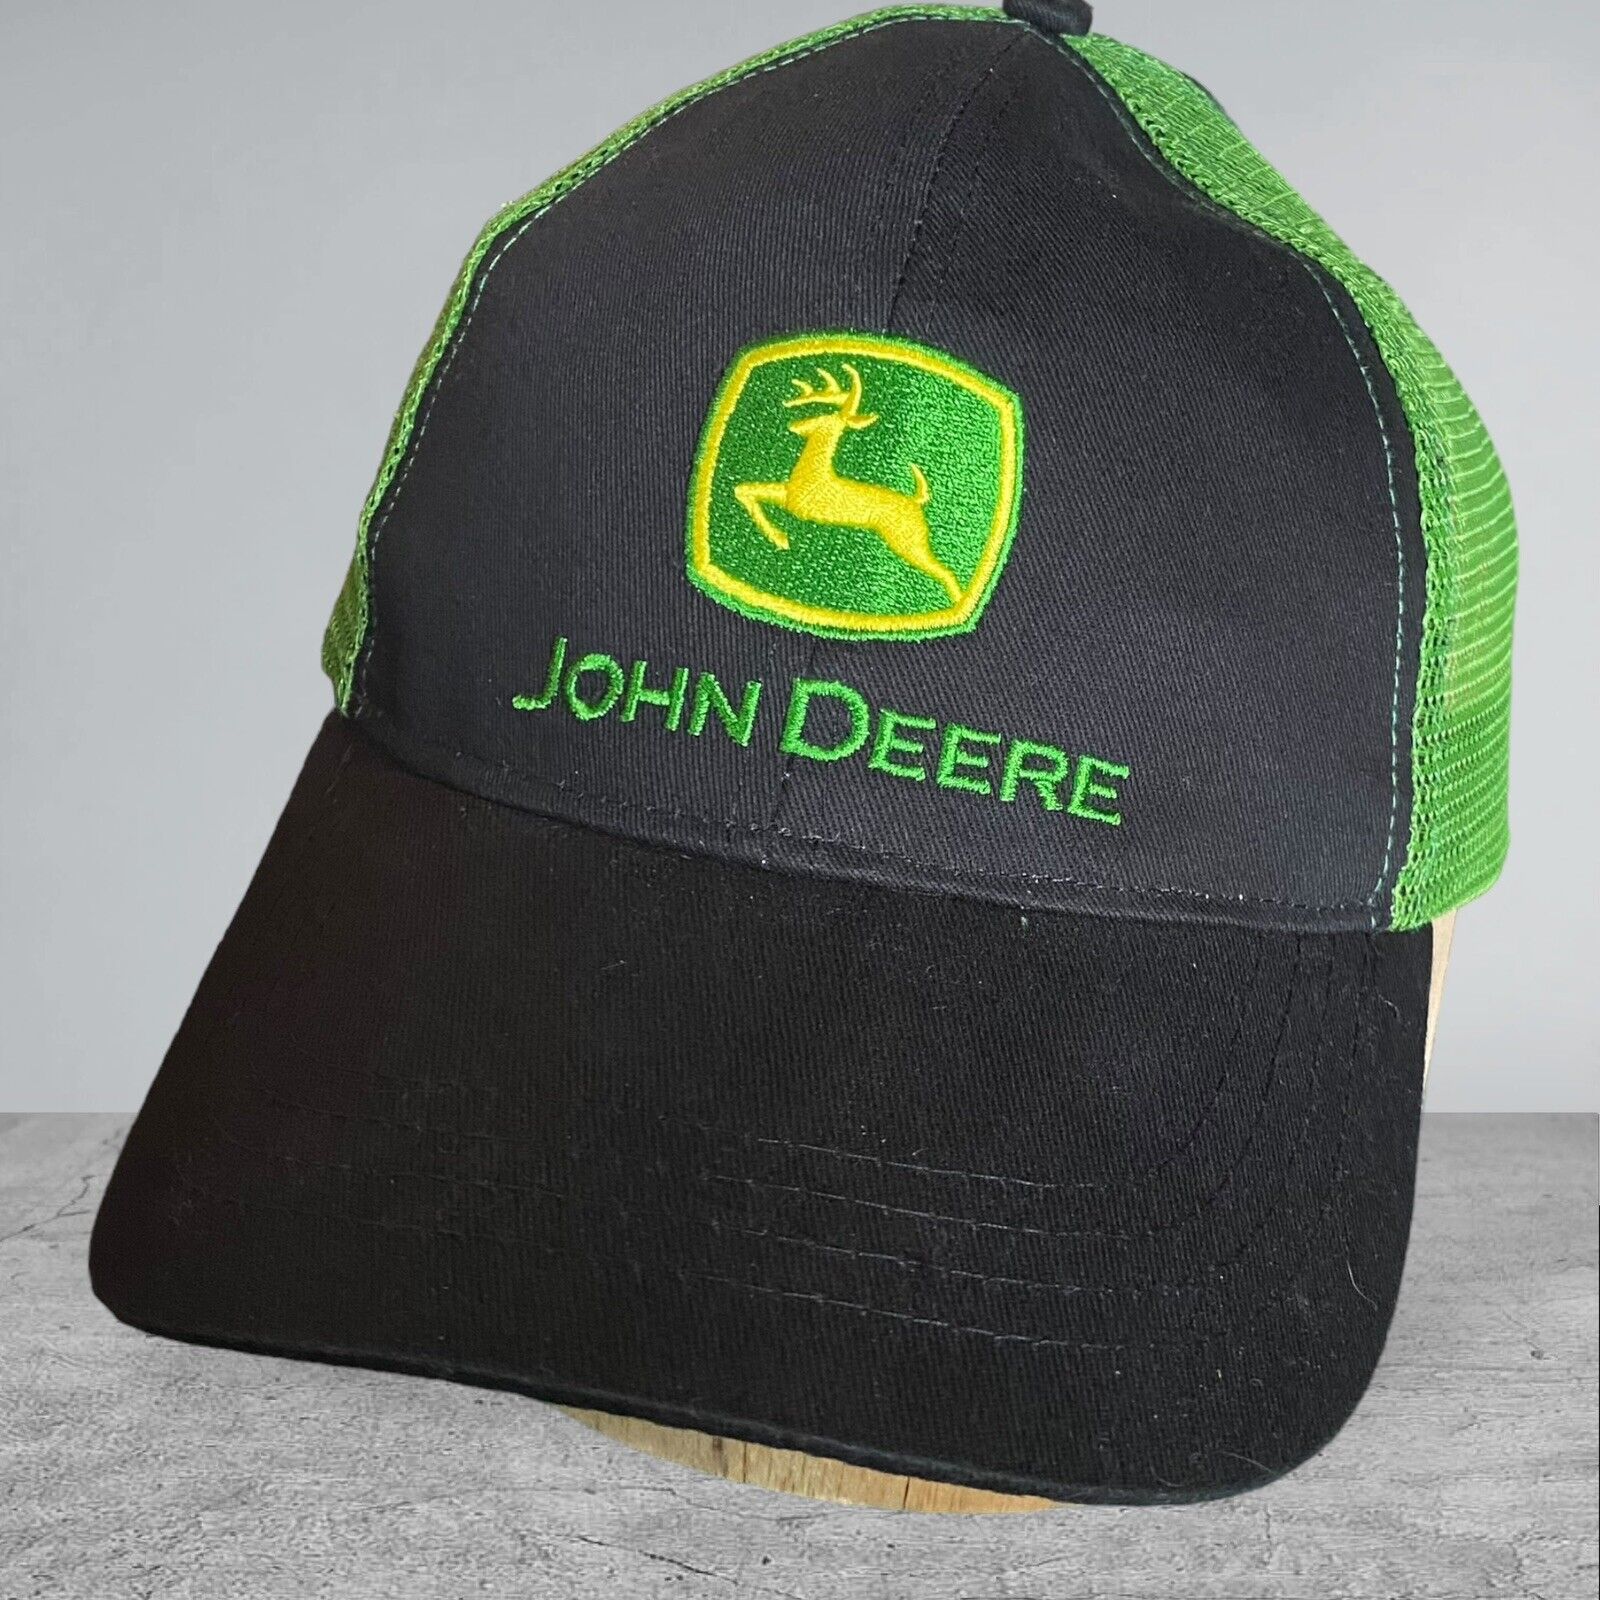 Vintage John Deere Hat Cap Adult Mesh Green Black JD Farmer Trucker Adjustable